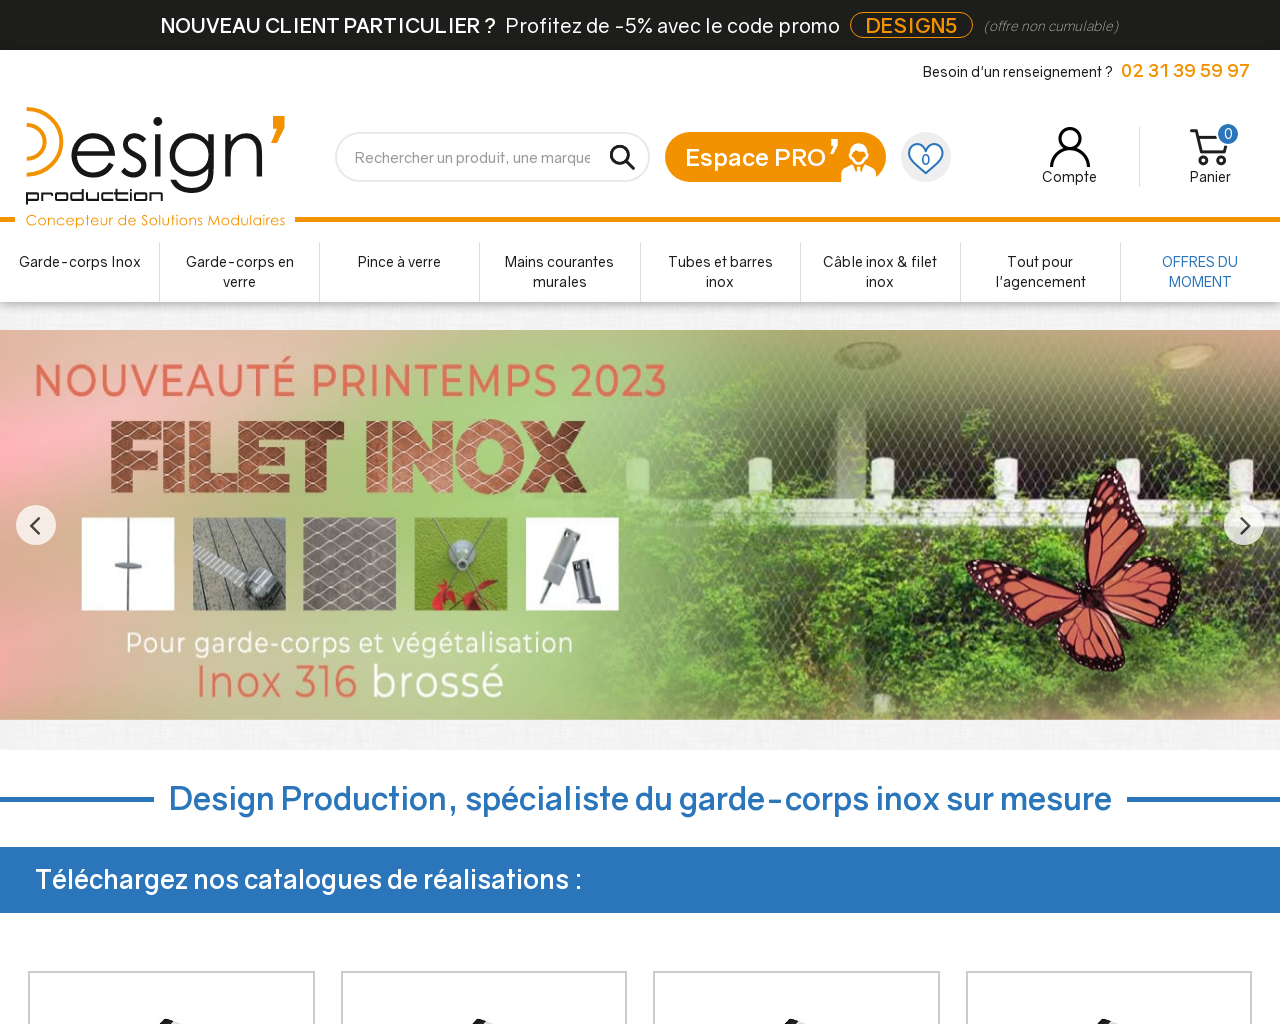 www.designproduction.fr